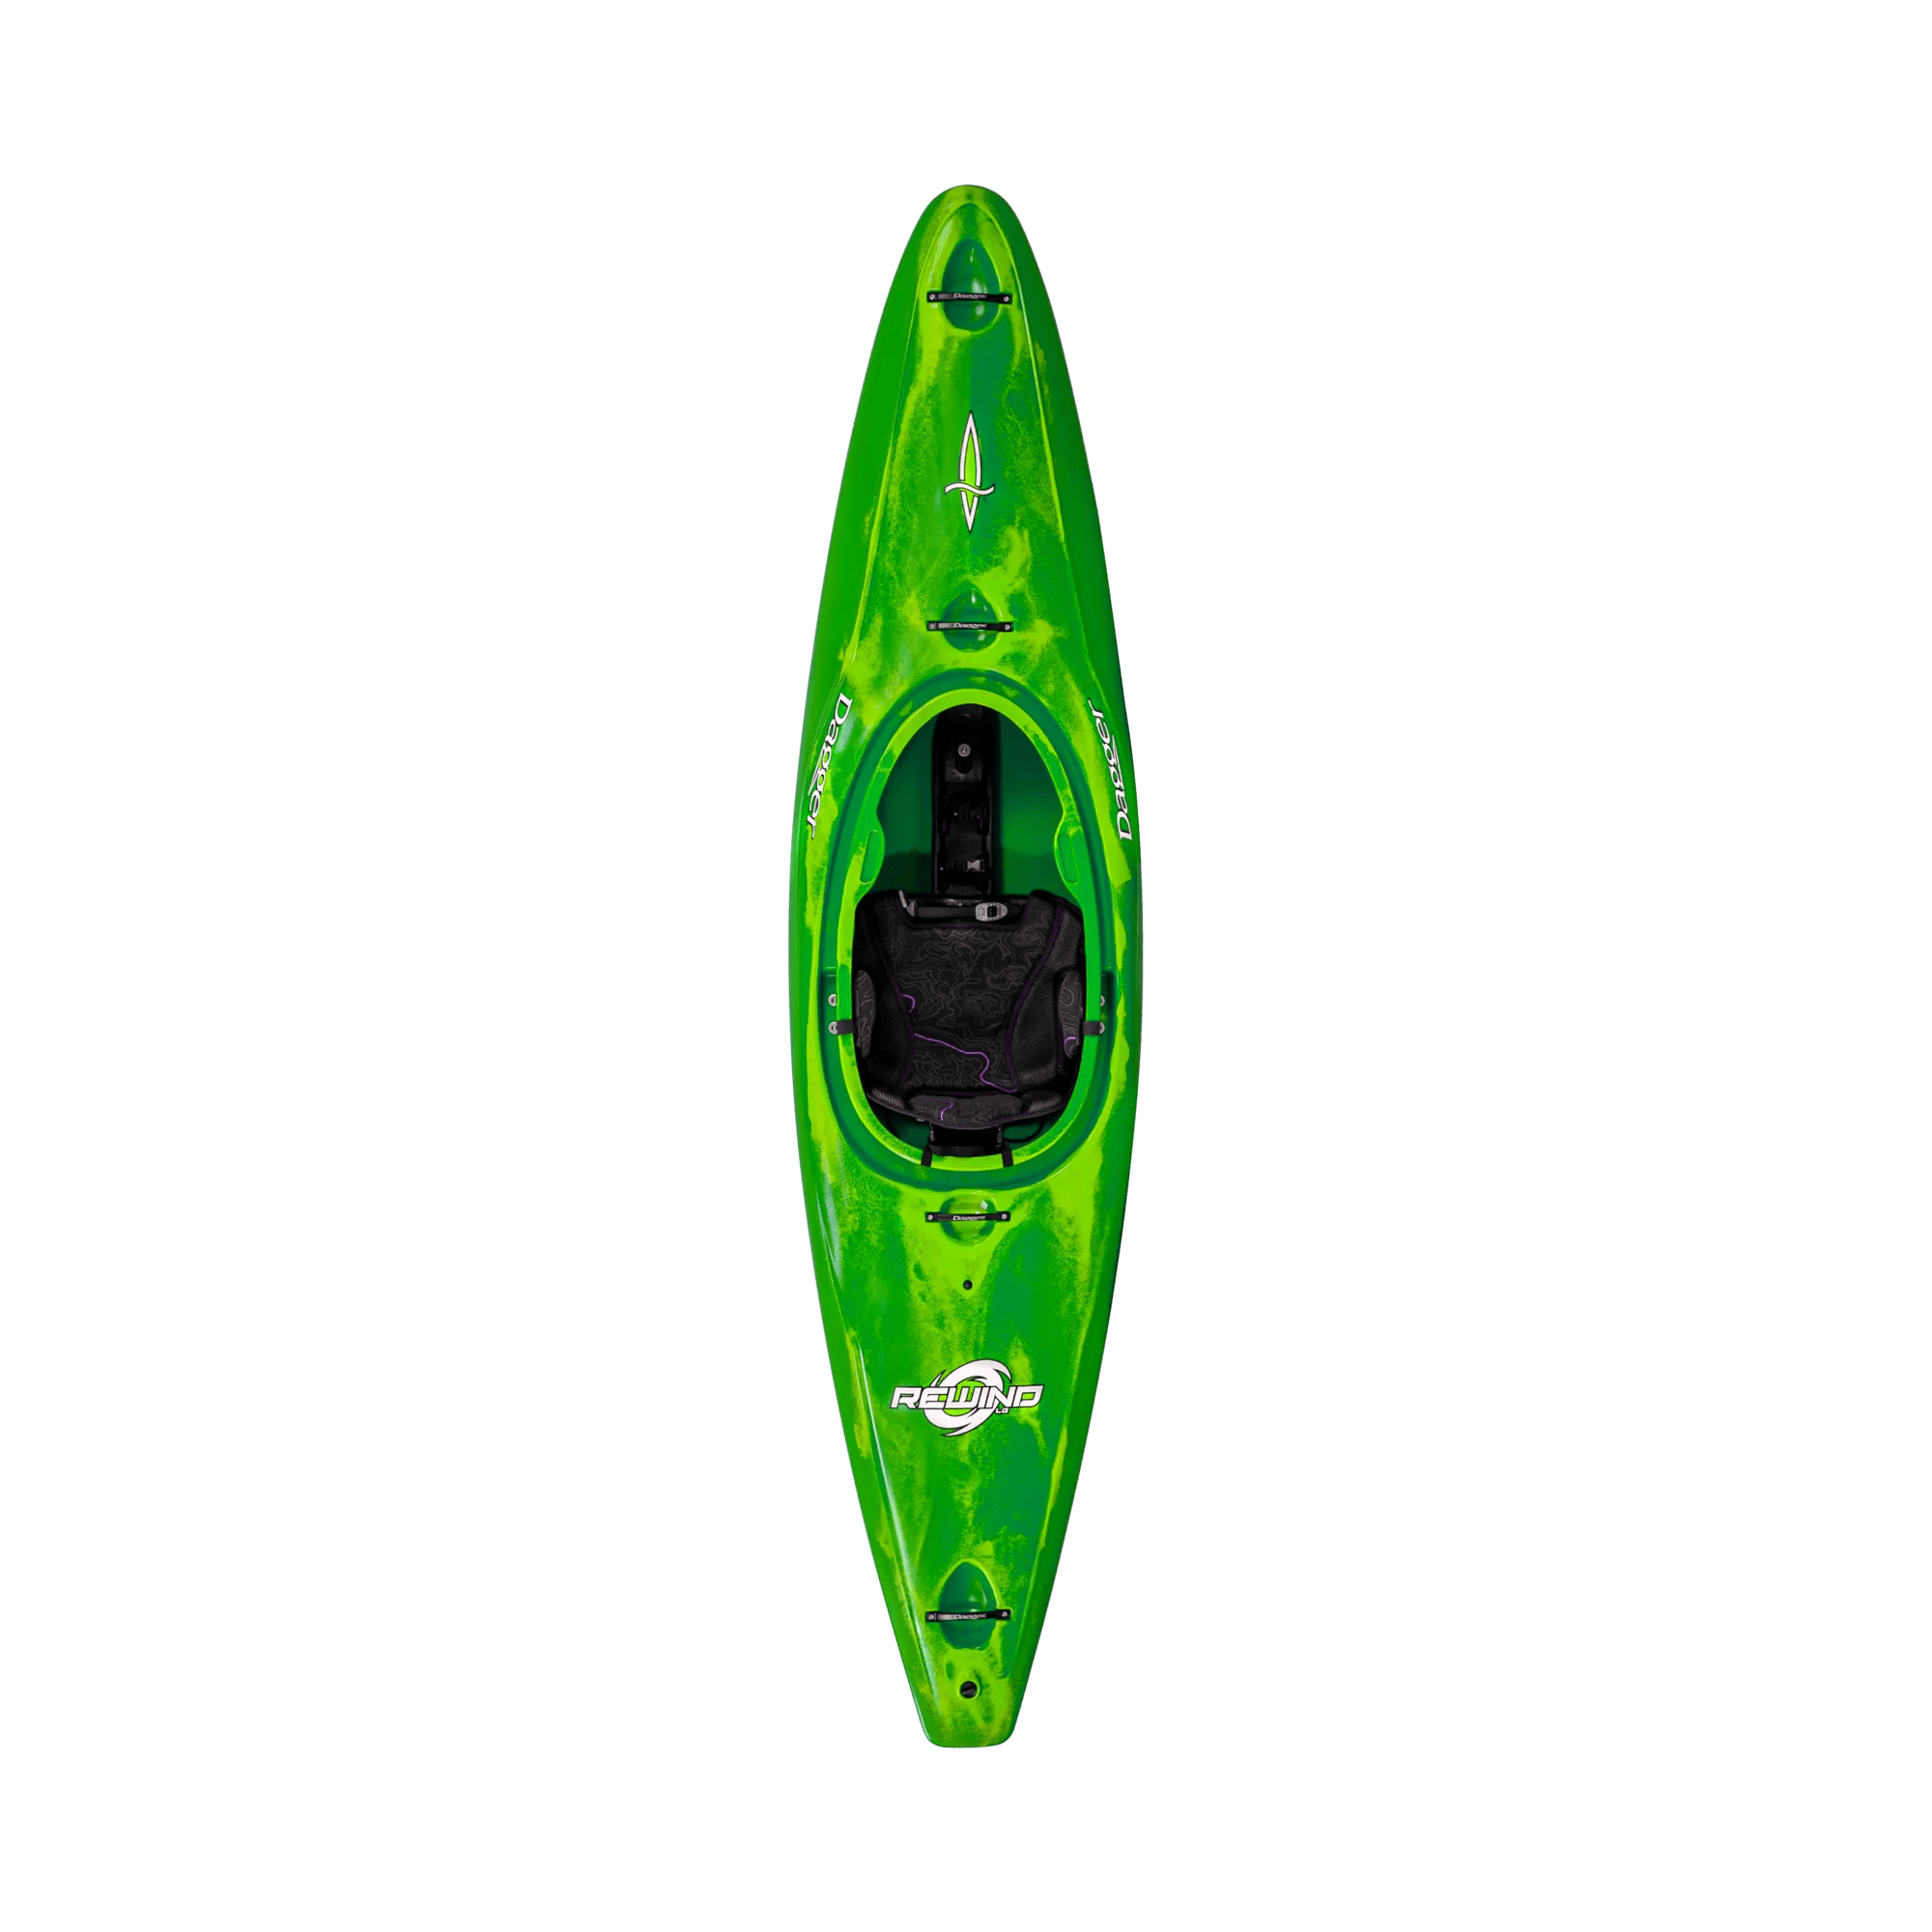 DAGGER - Rewind L River Play Whitewater Kayak - Green - 9010484207 - 